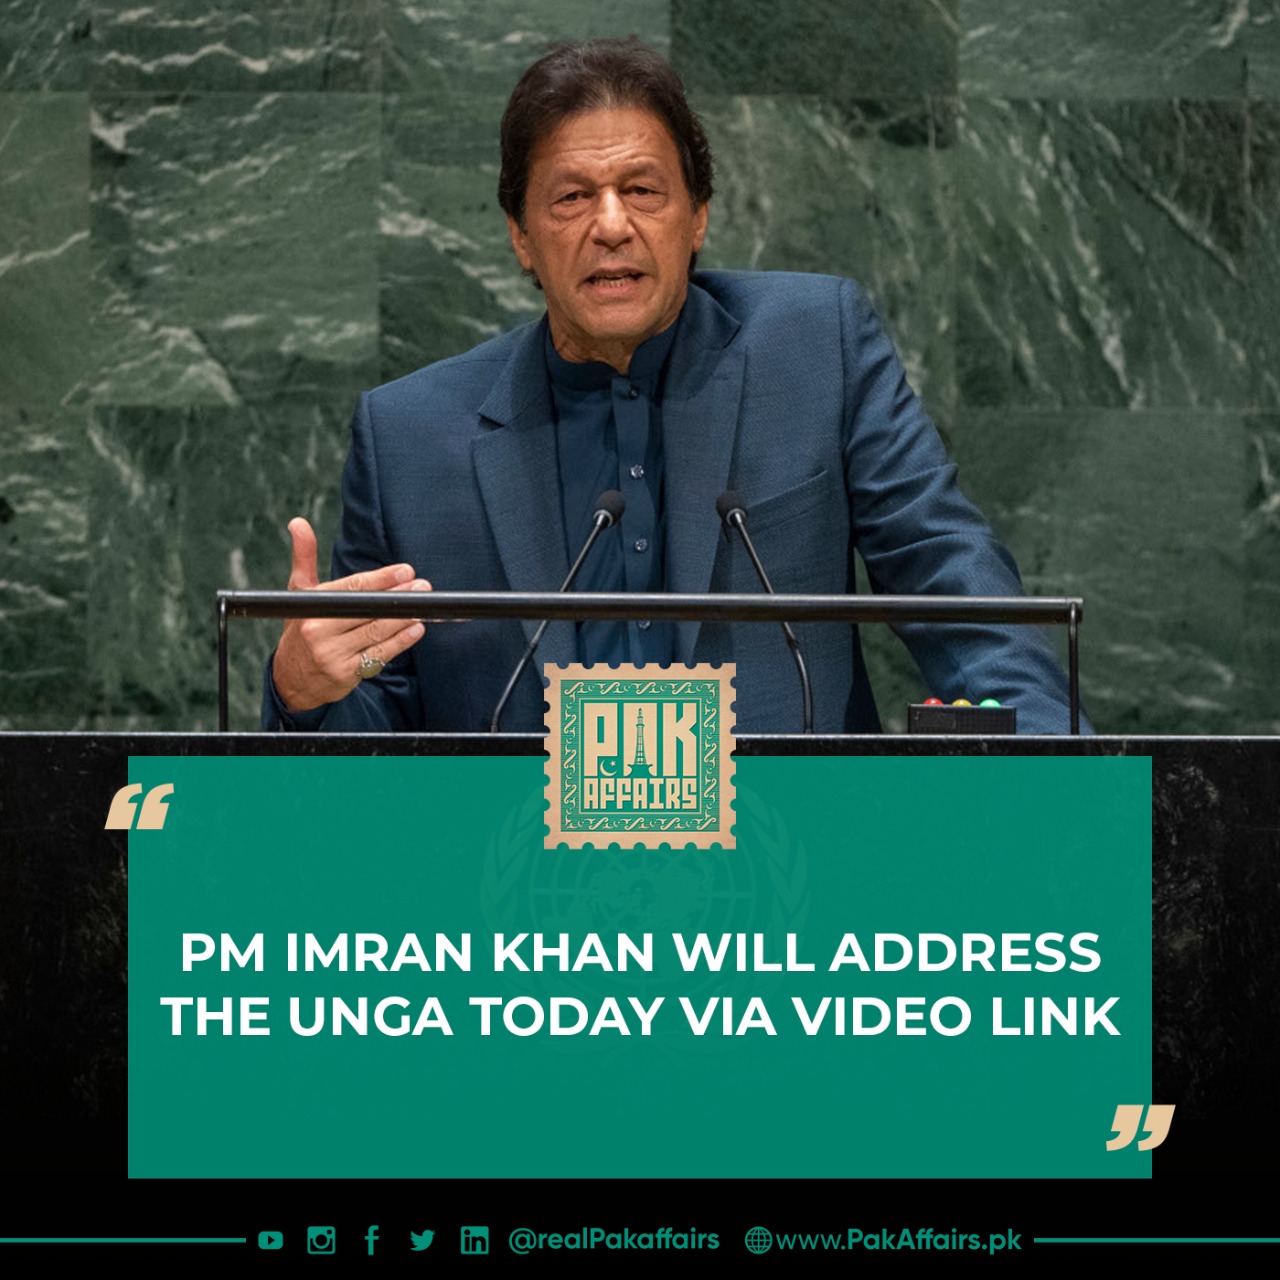 PM Imran Khan will address the UNGA today via video link